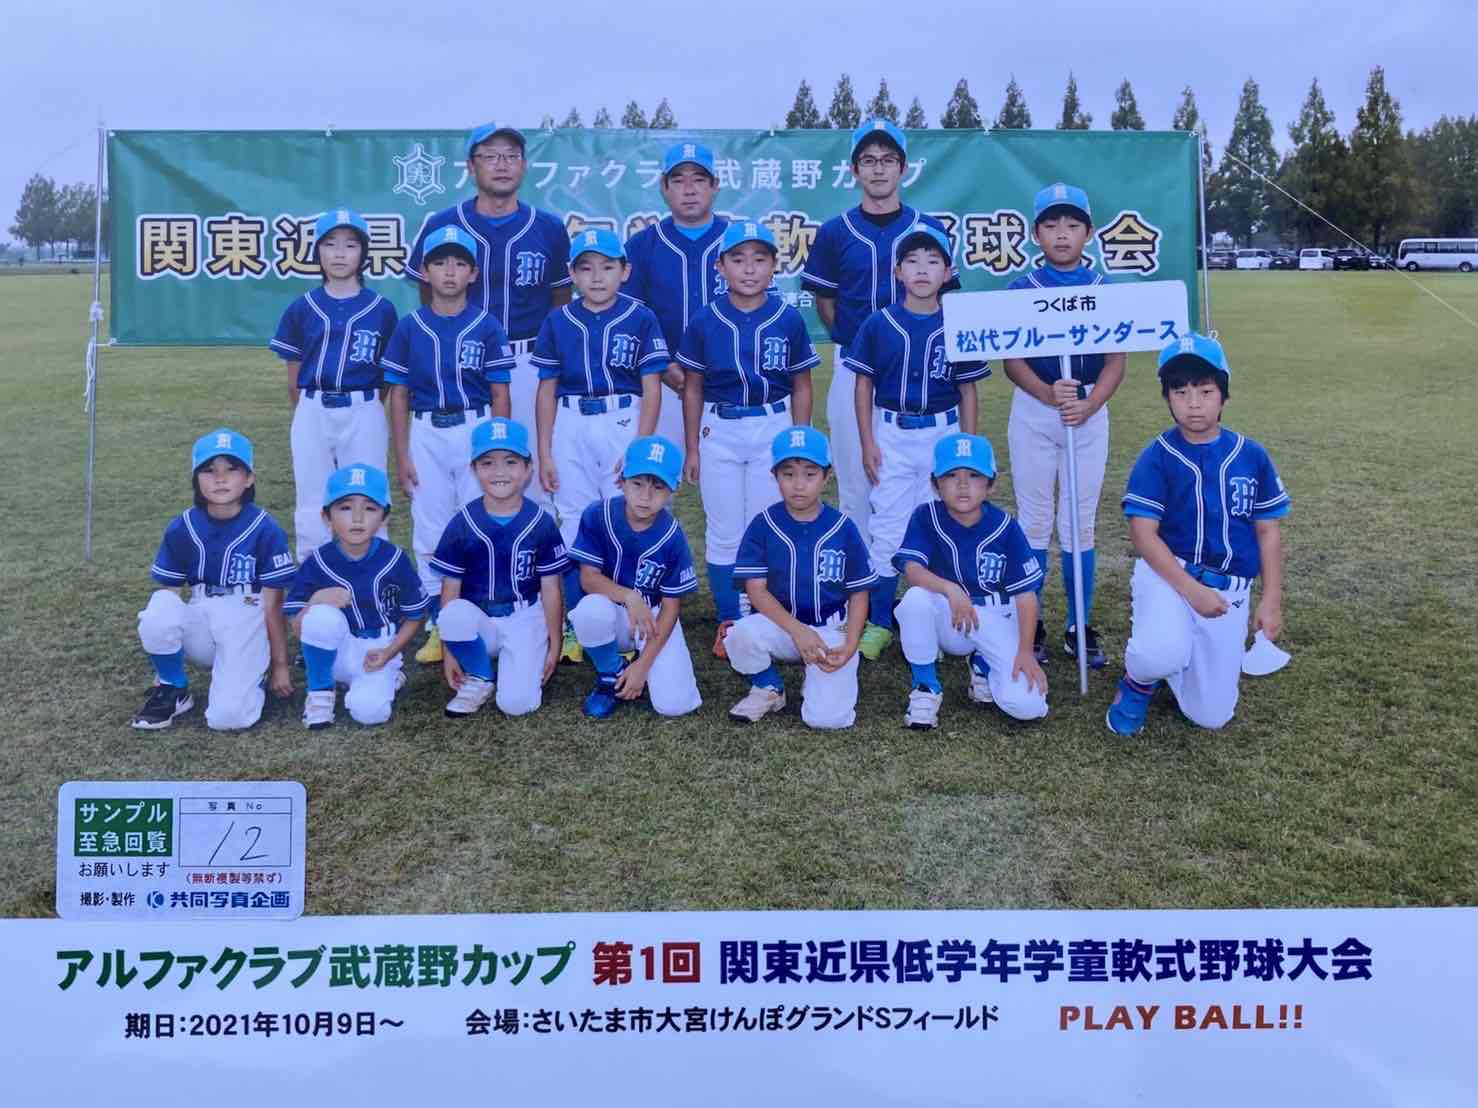 ※Cチーム アルファクラブ武蔵野カップ第1回関東近県低学年学童軟式野球大会